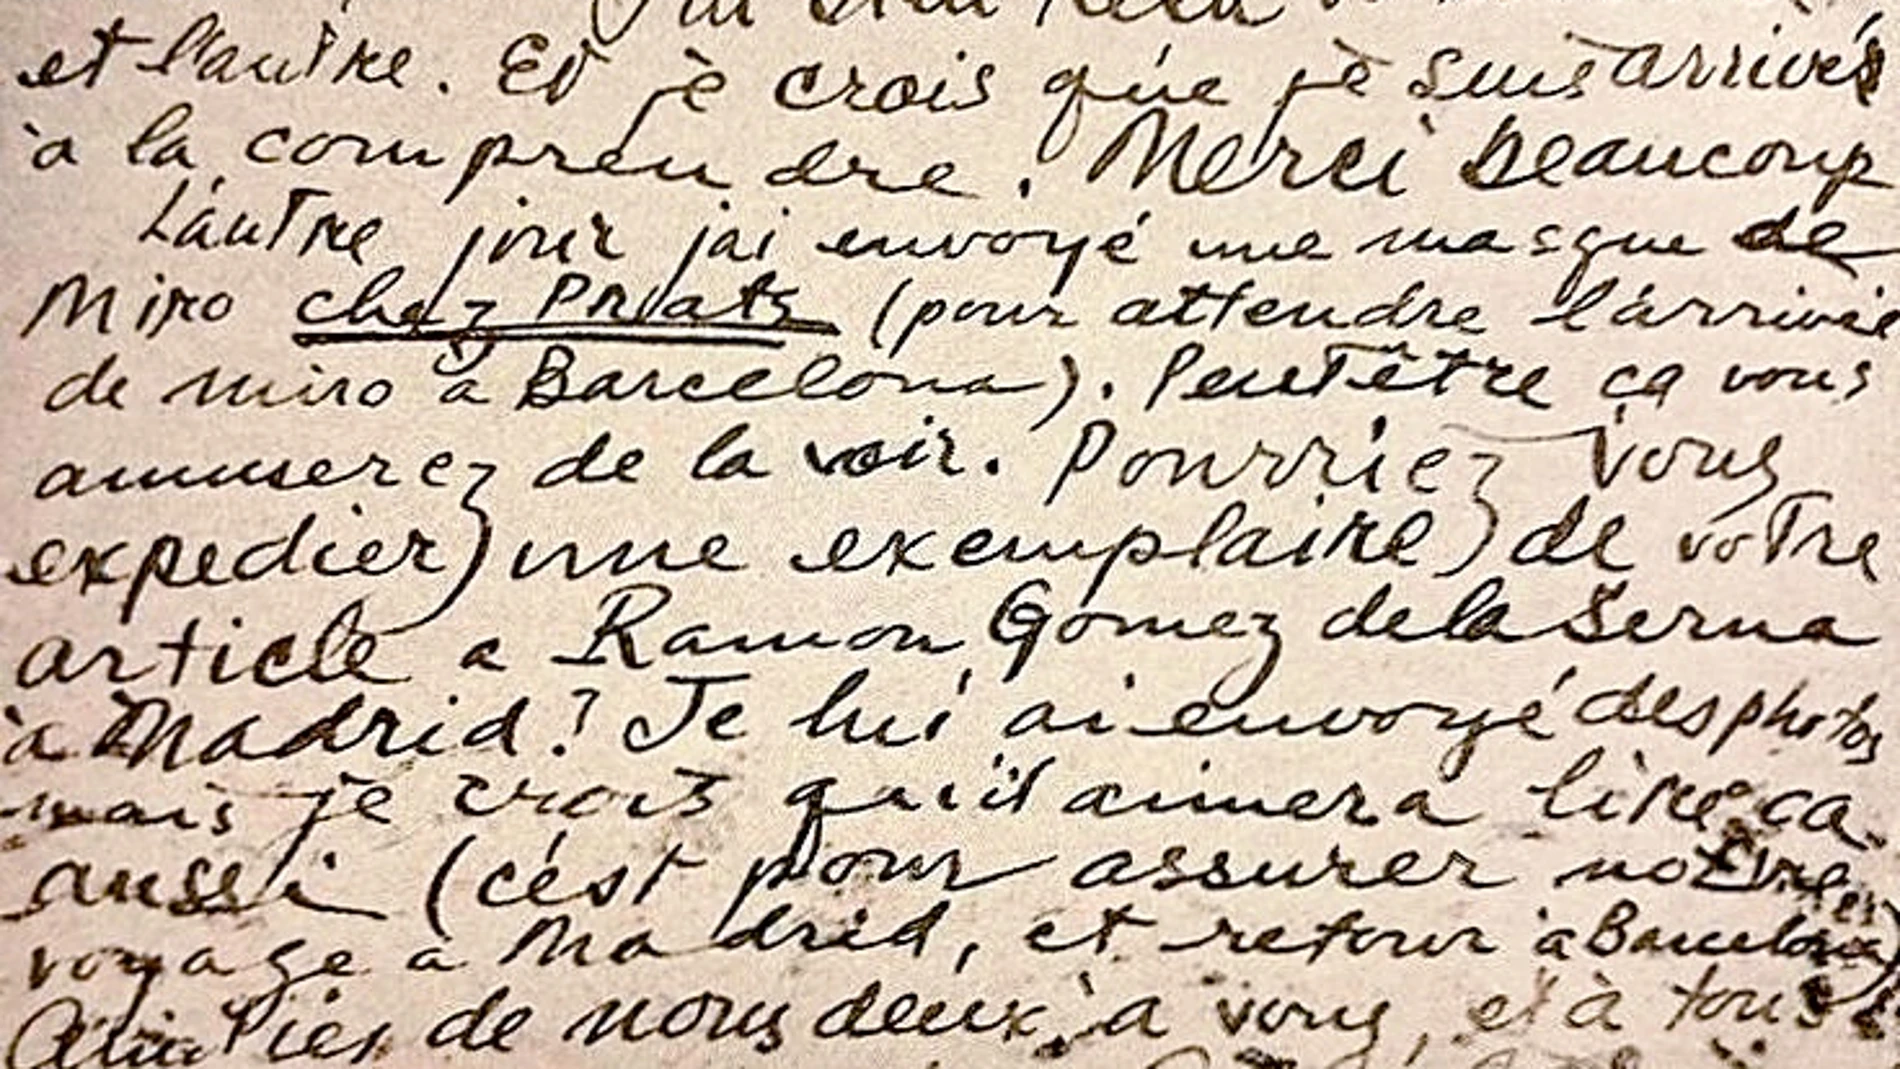 Las Cartas que Sebastià Gasch recibió de personalidades de la vanguardia, como Calder, son de grandísimo valor documental